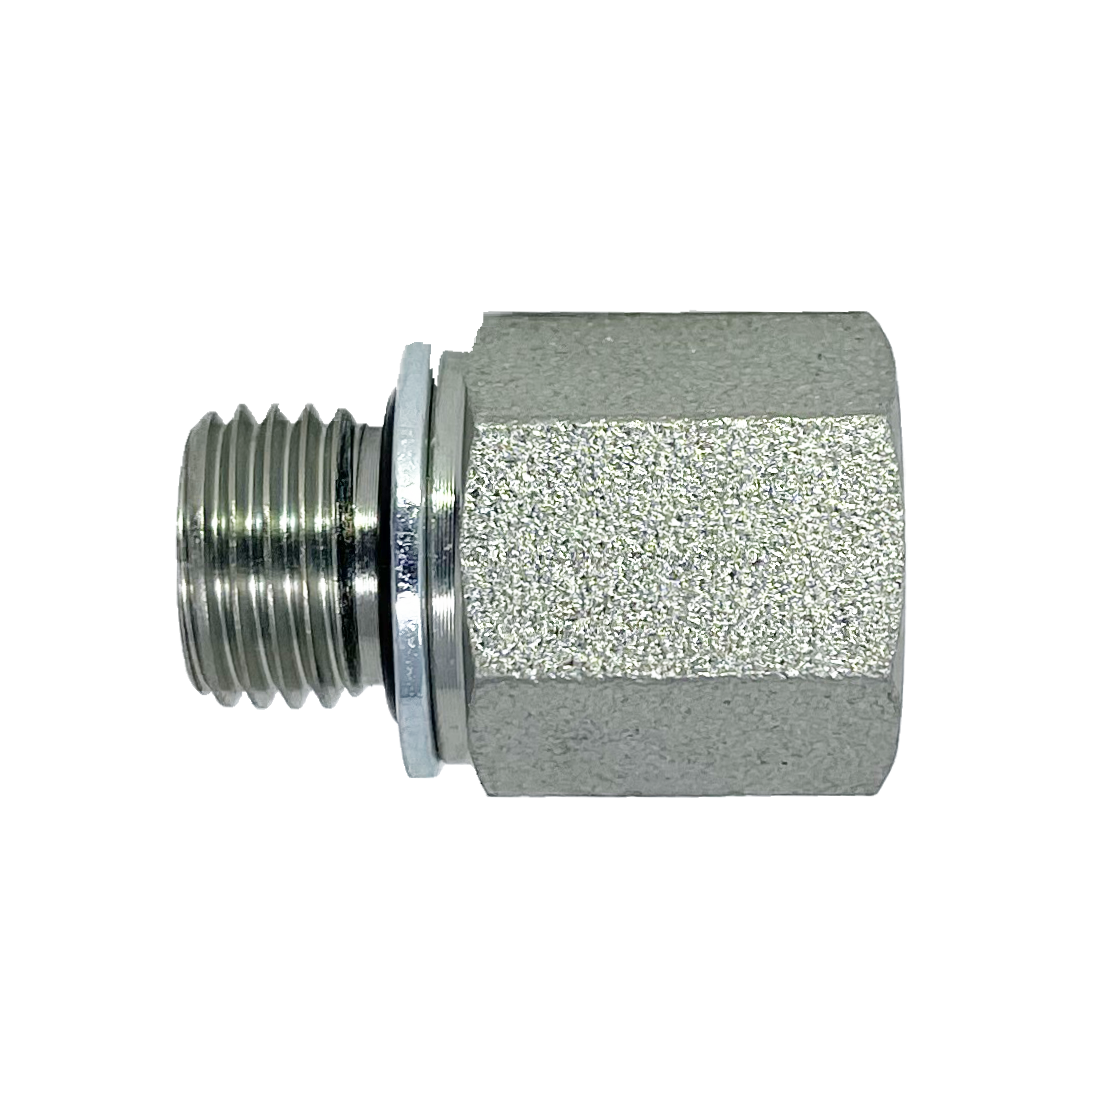 9635S-16-L10-08 : Adaptall Straight Adapter, Male L10 DIN Tube x Female 0.5 (1/2") NPT, Carbon Steel